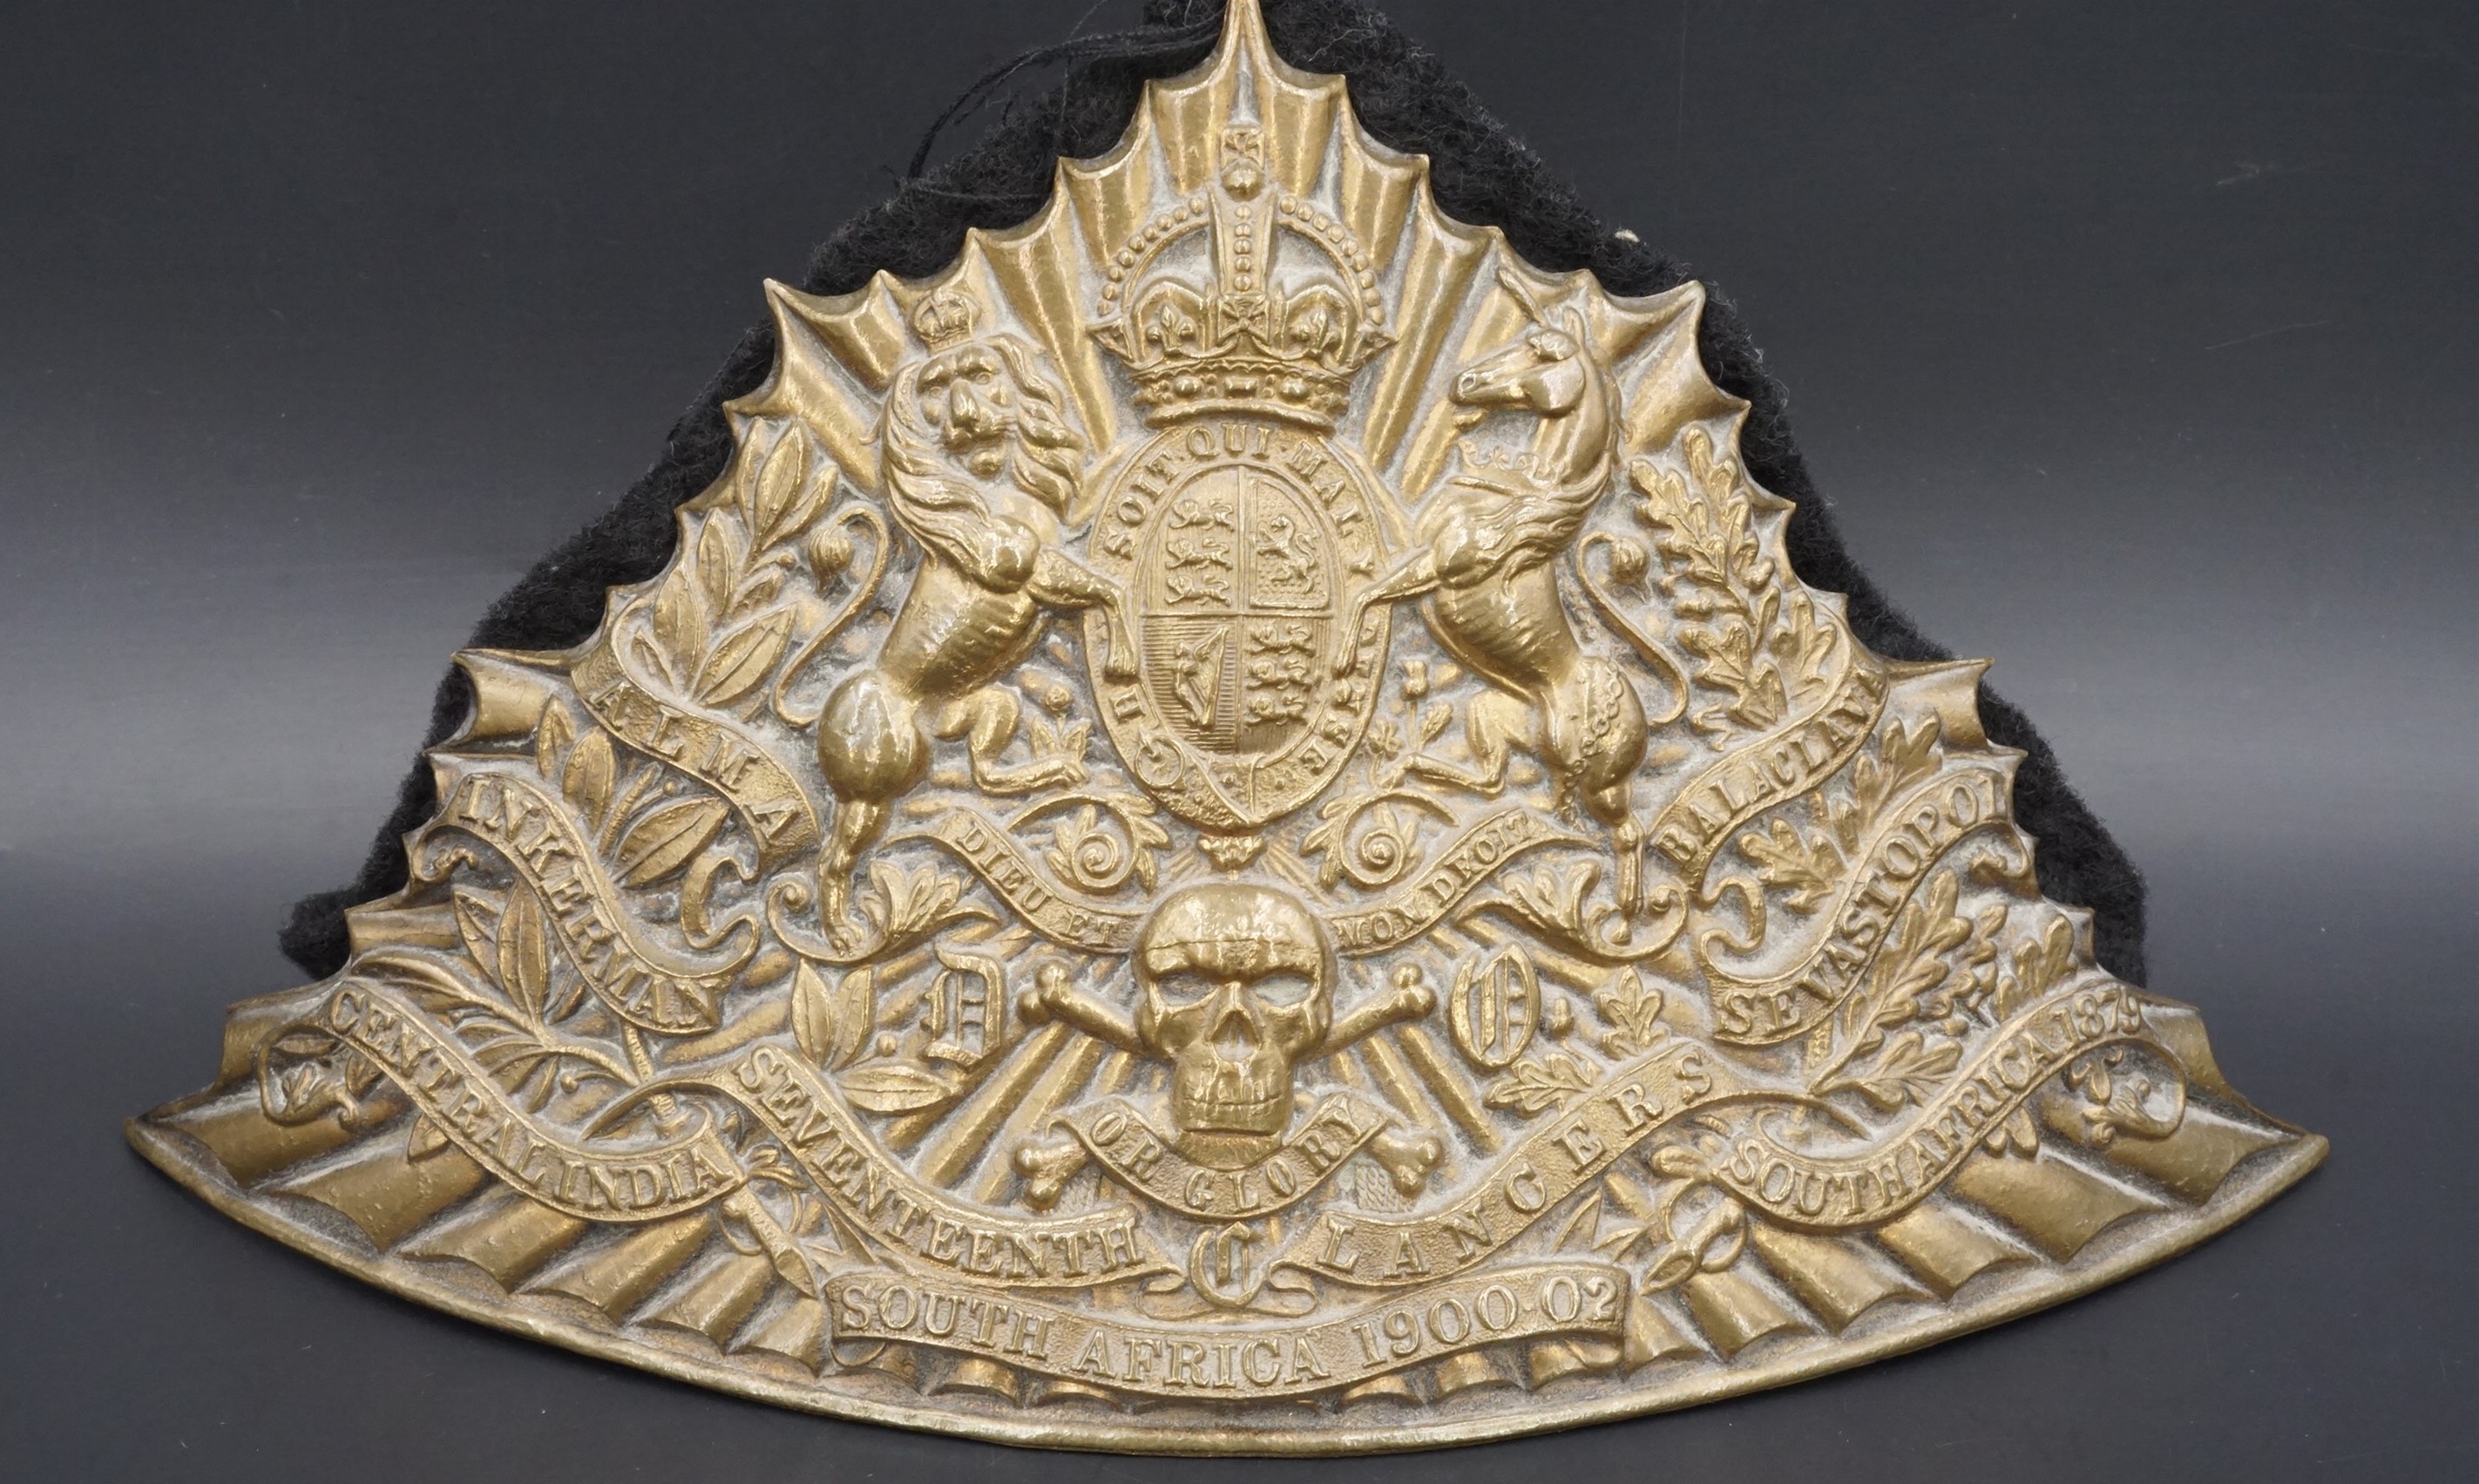 A post-1901 Seventeenth Lancers other ranks' helmet plate